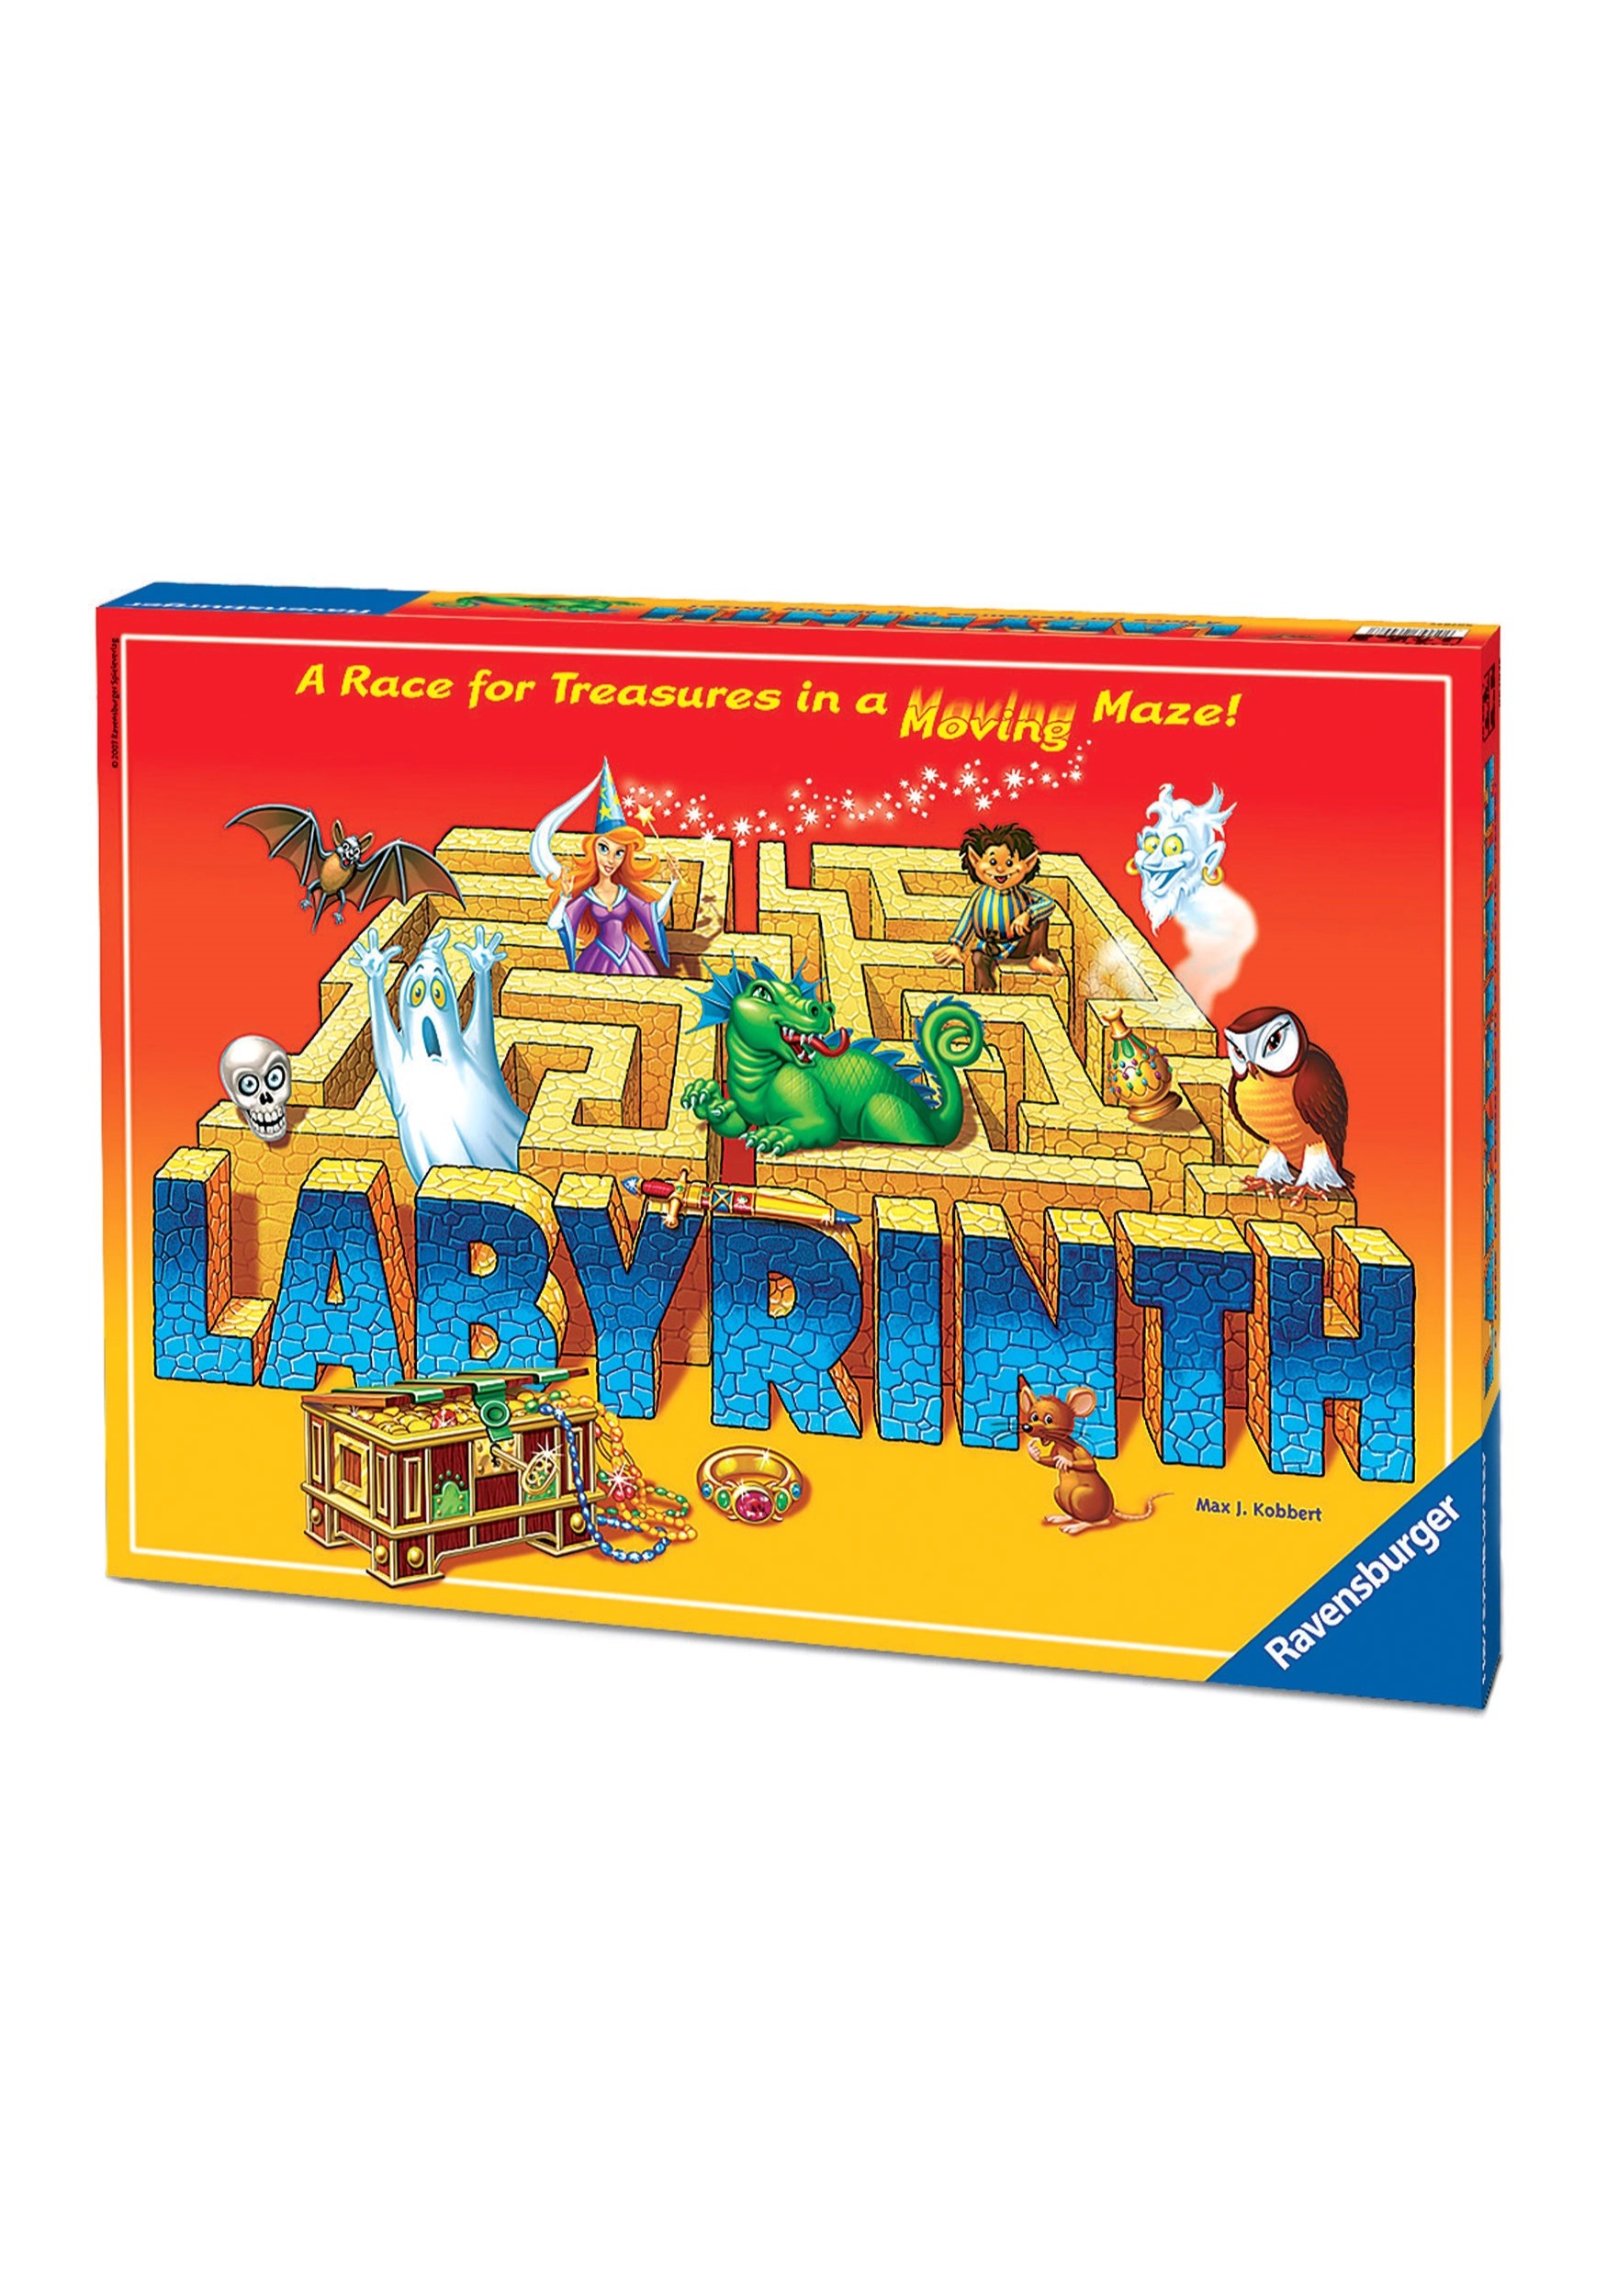 ravensburger labyrinth board game